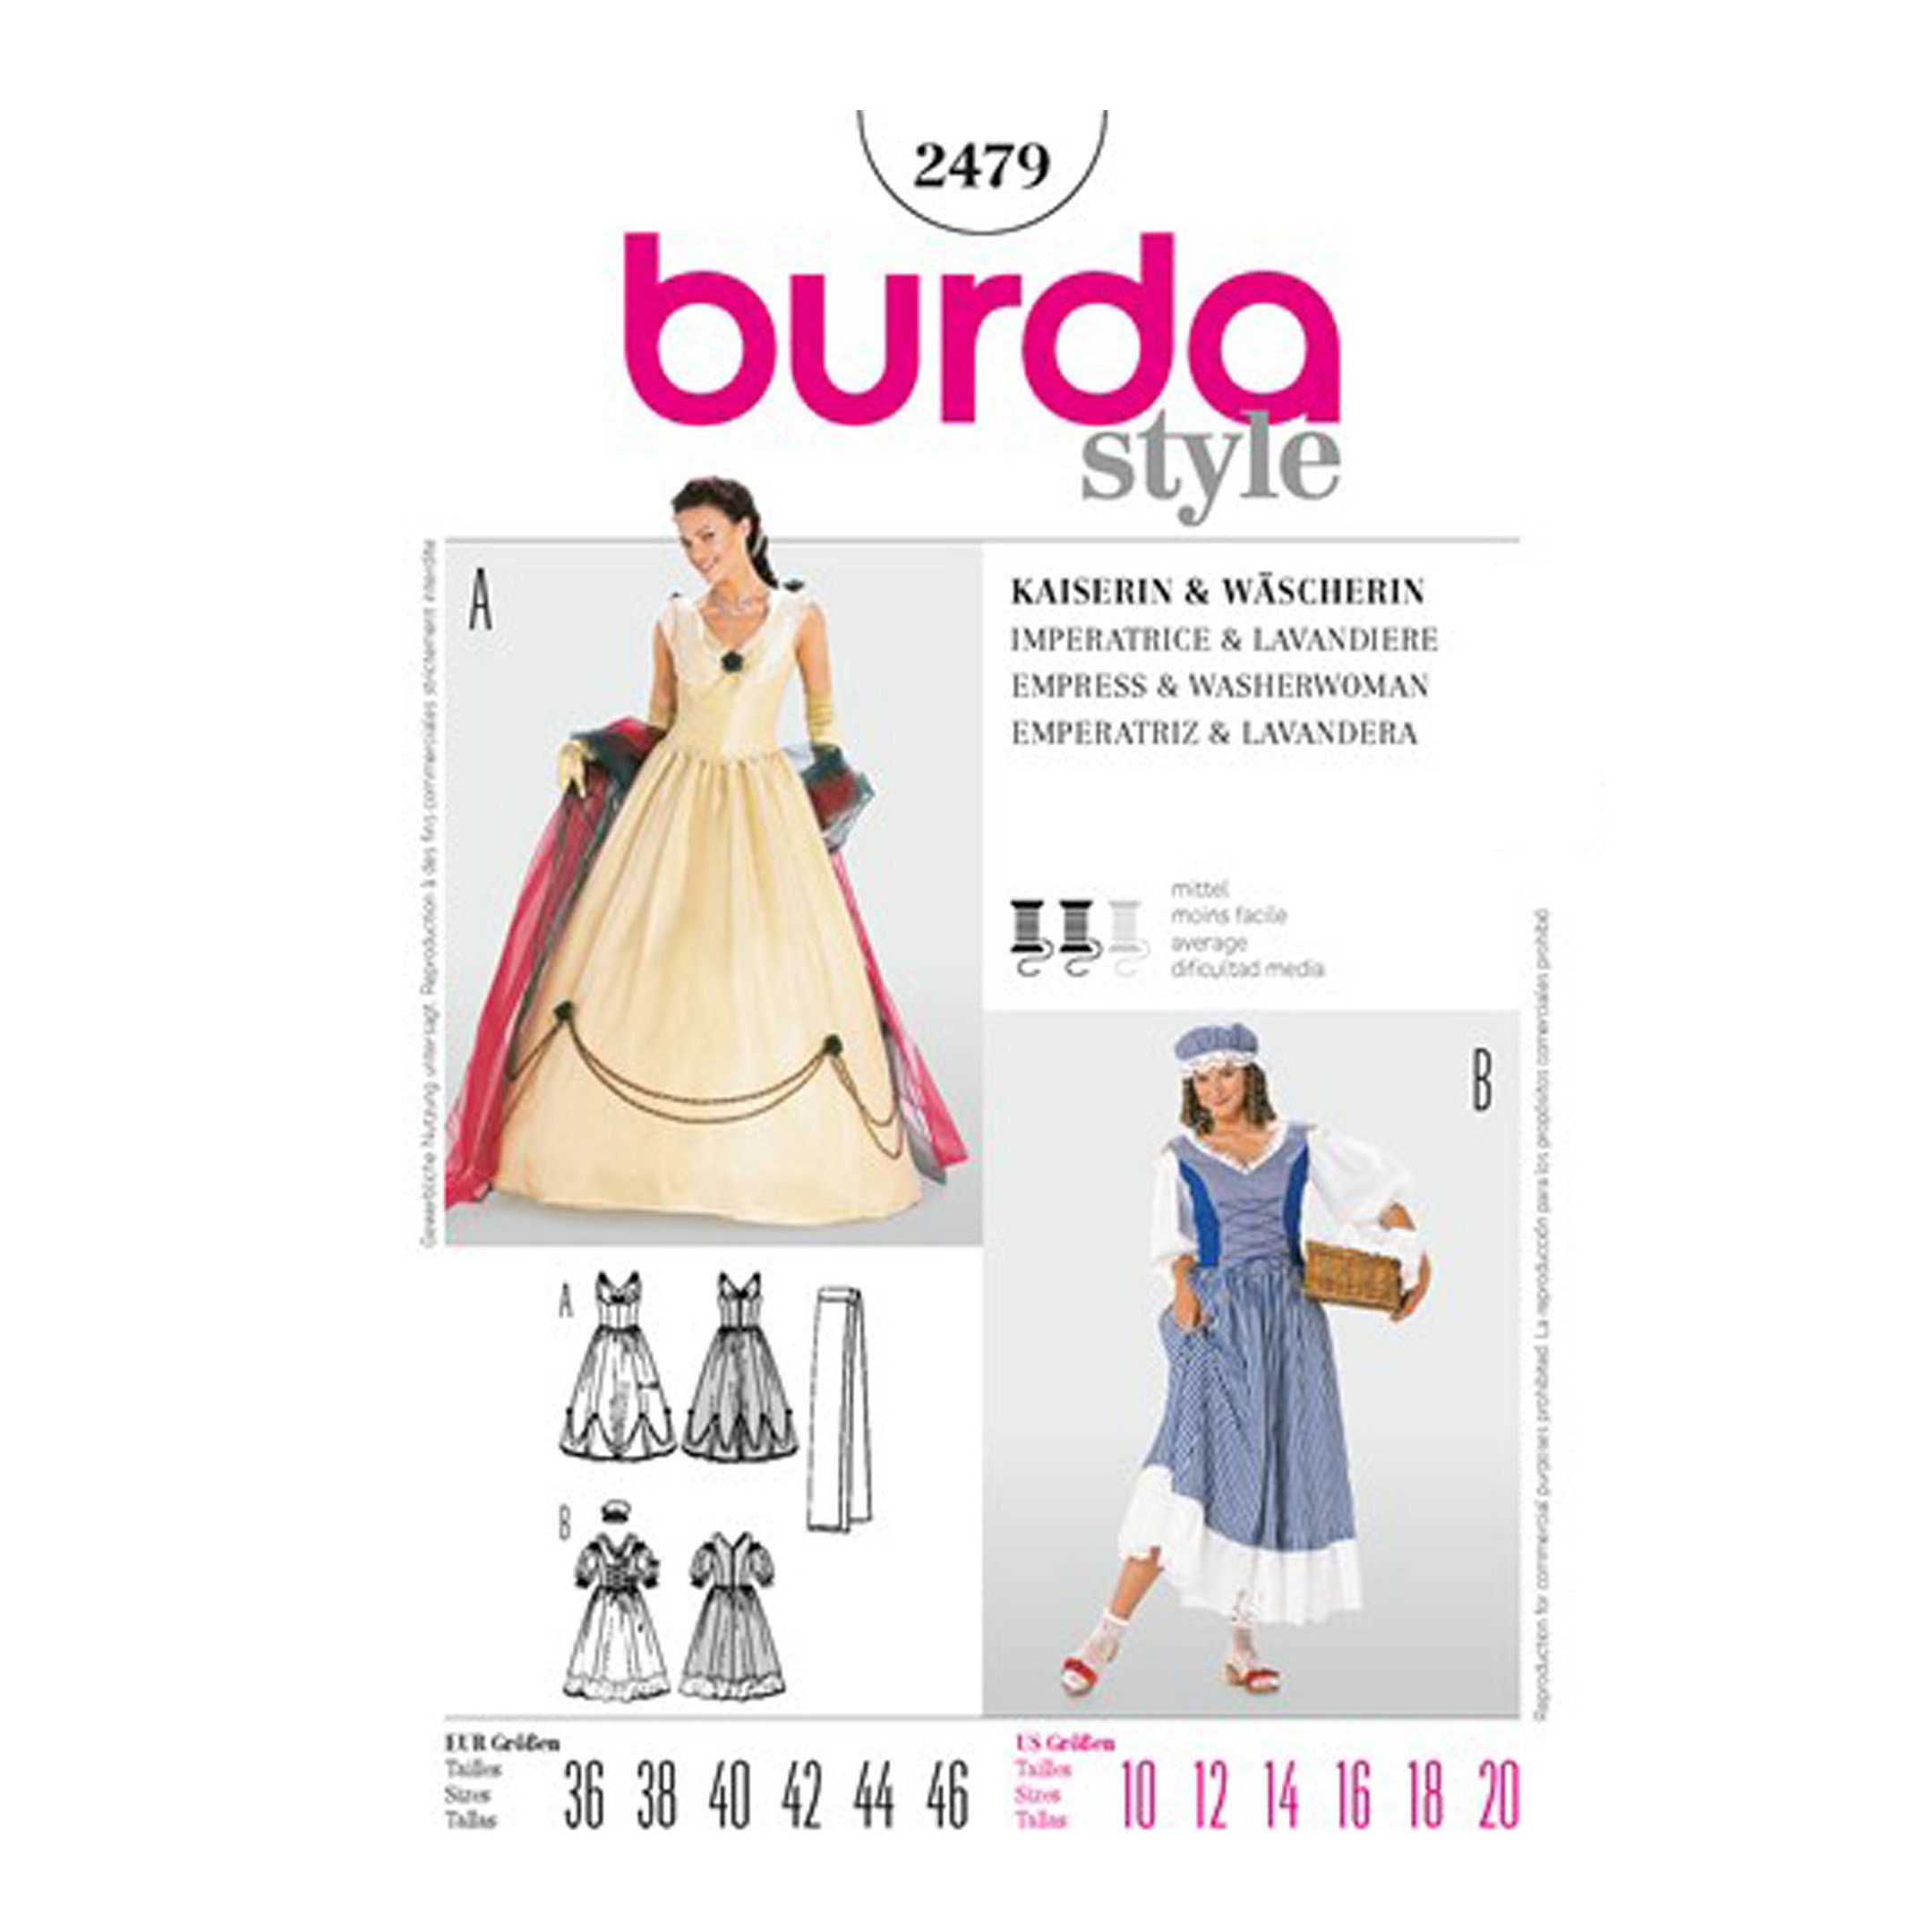 Burda Pattern 2479 Adult Empress & Washer Woman Costume